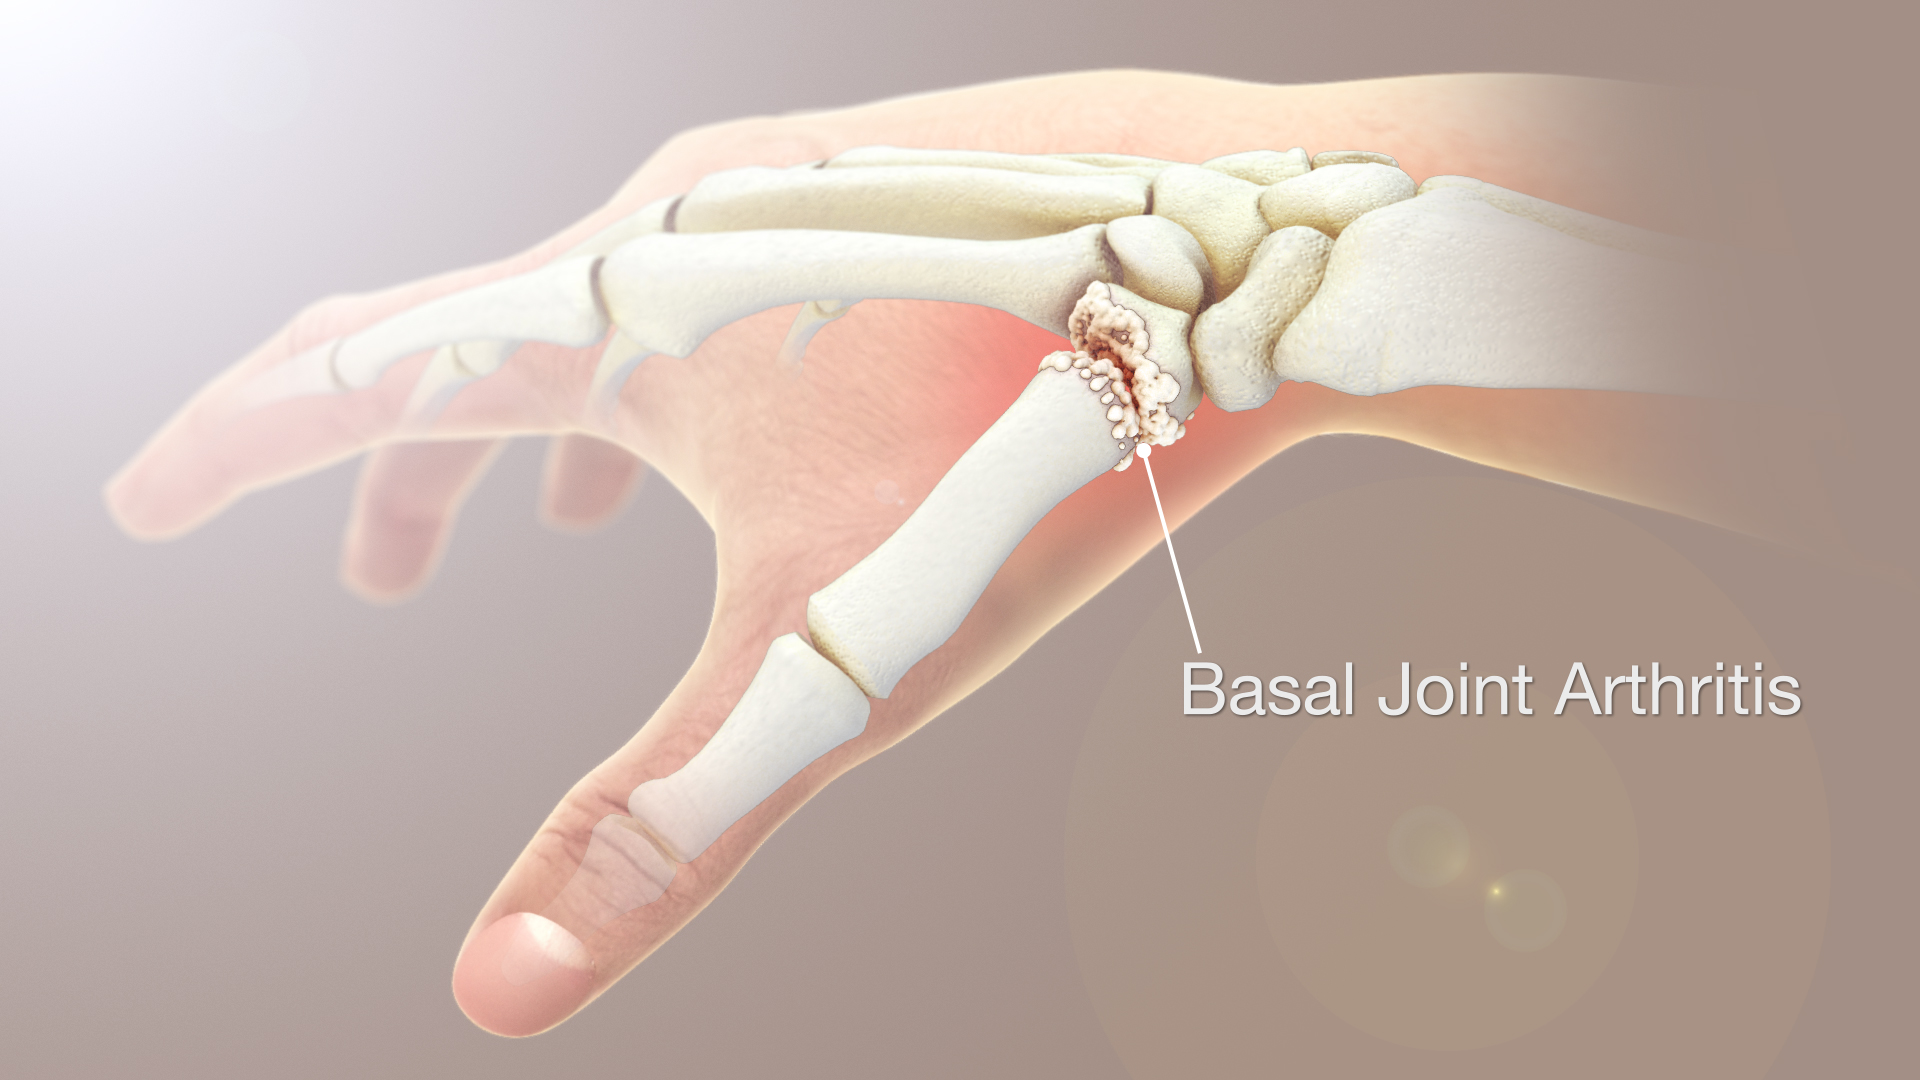 Basal Joint Arthritis Shown & Explained Using Medical Animation Still Shot